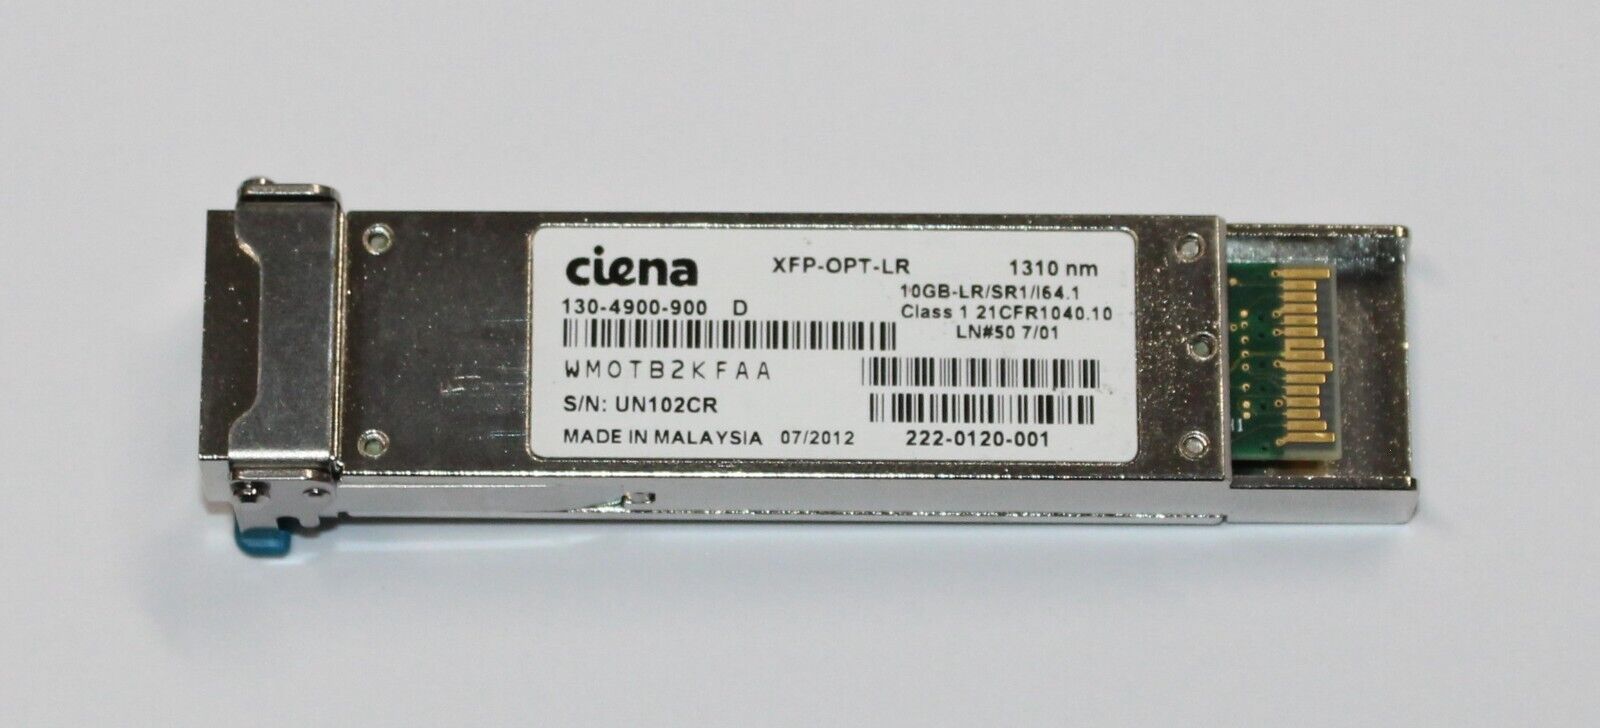 Ciena | 130-4900-900 D | XFP-OPT-LR 10GB-LR/SR/I64.1 Transceiver Module